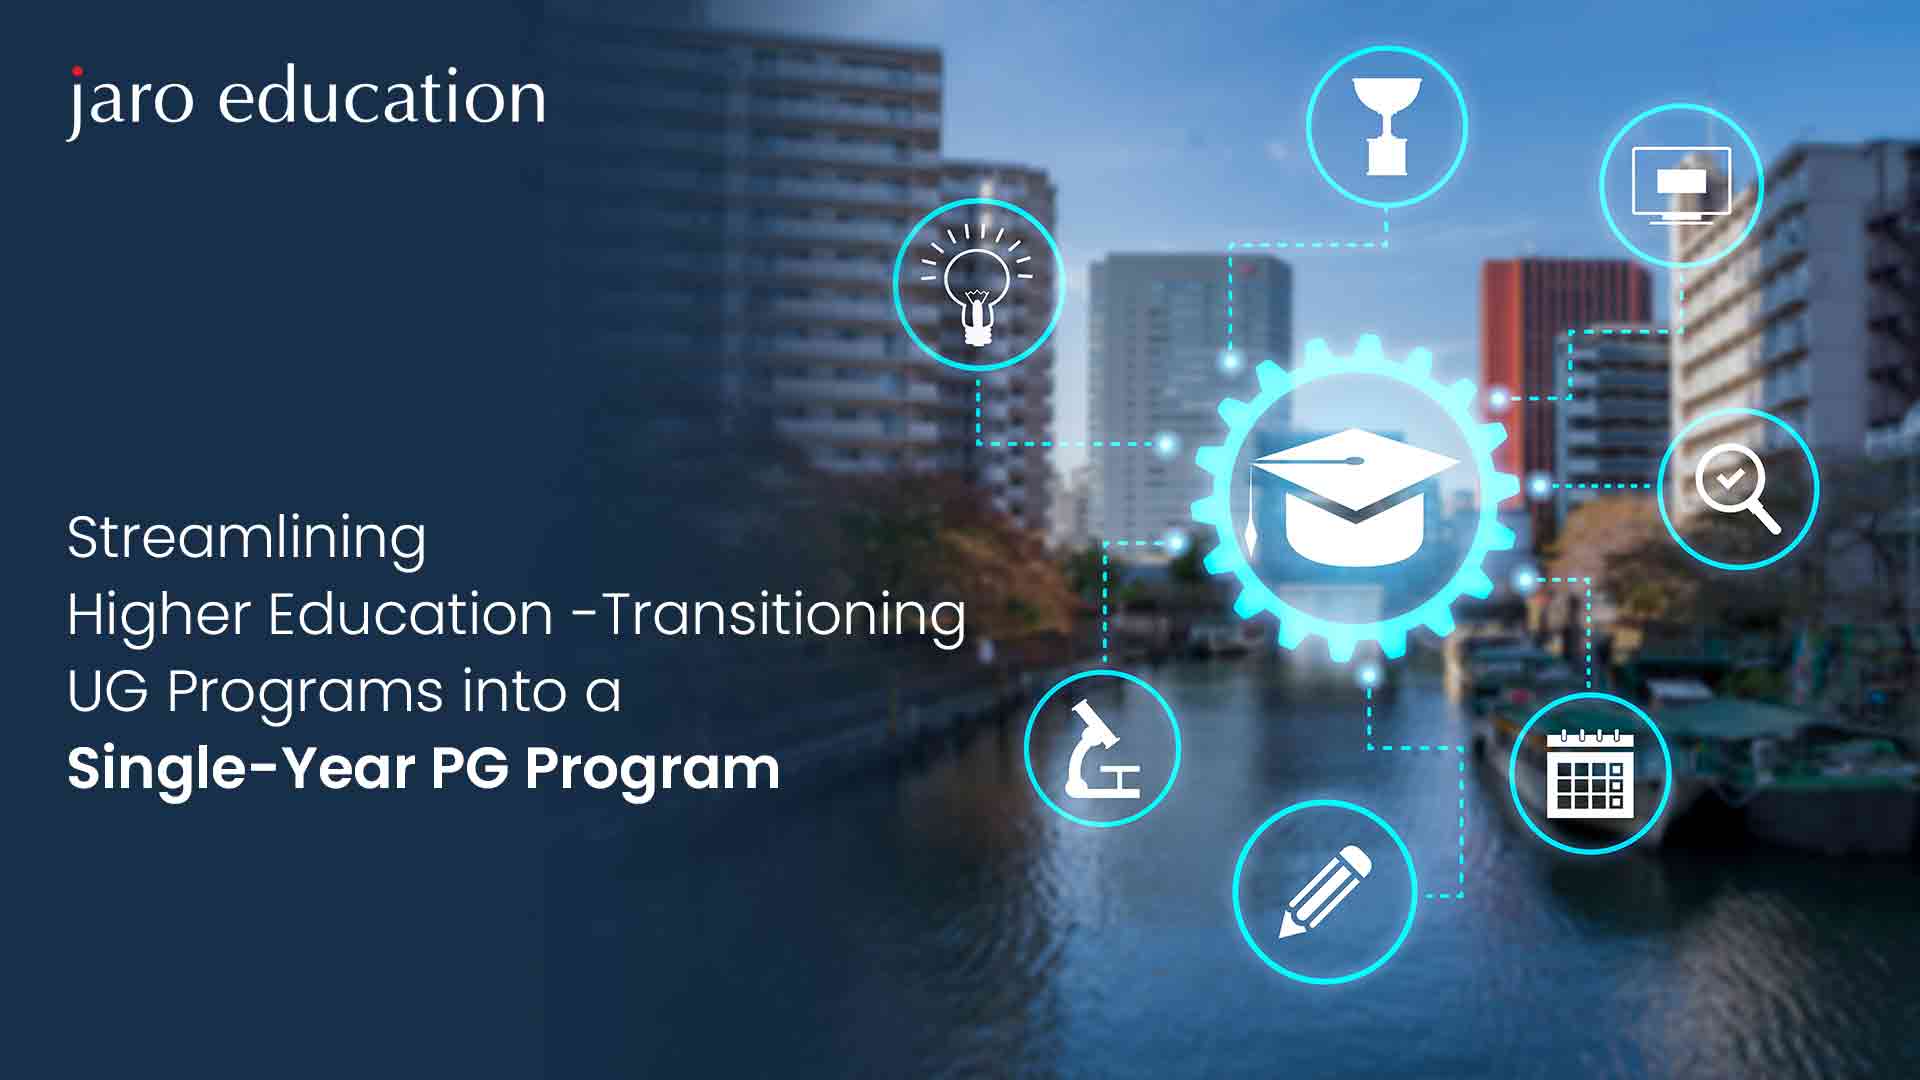 Streamlining Higher Education Transitioning UG Programs into a Single Year PG Program